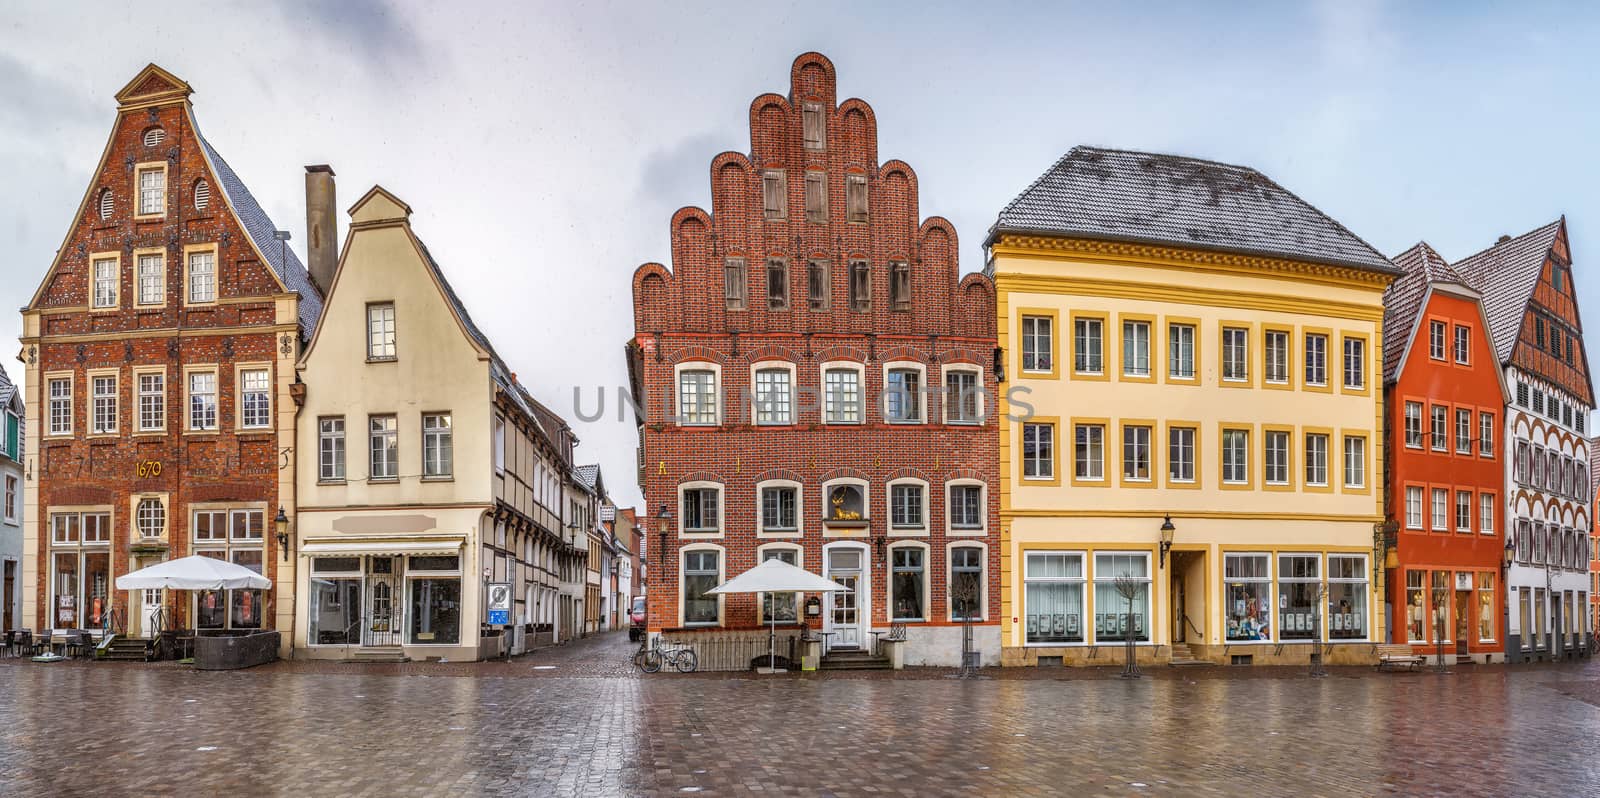 Historical market square, Warendorf, Germany by borisb17